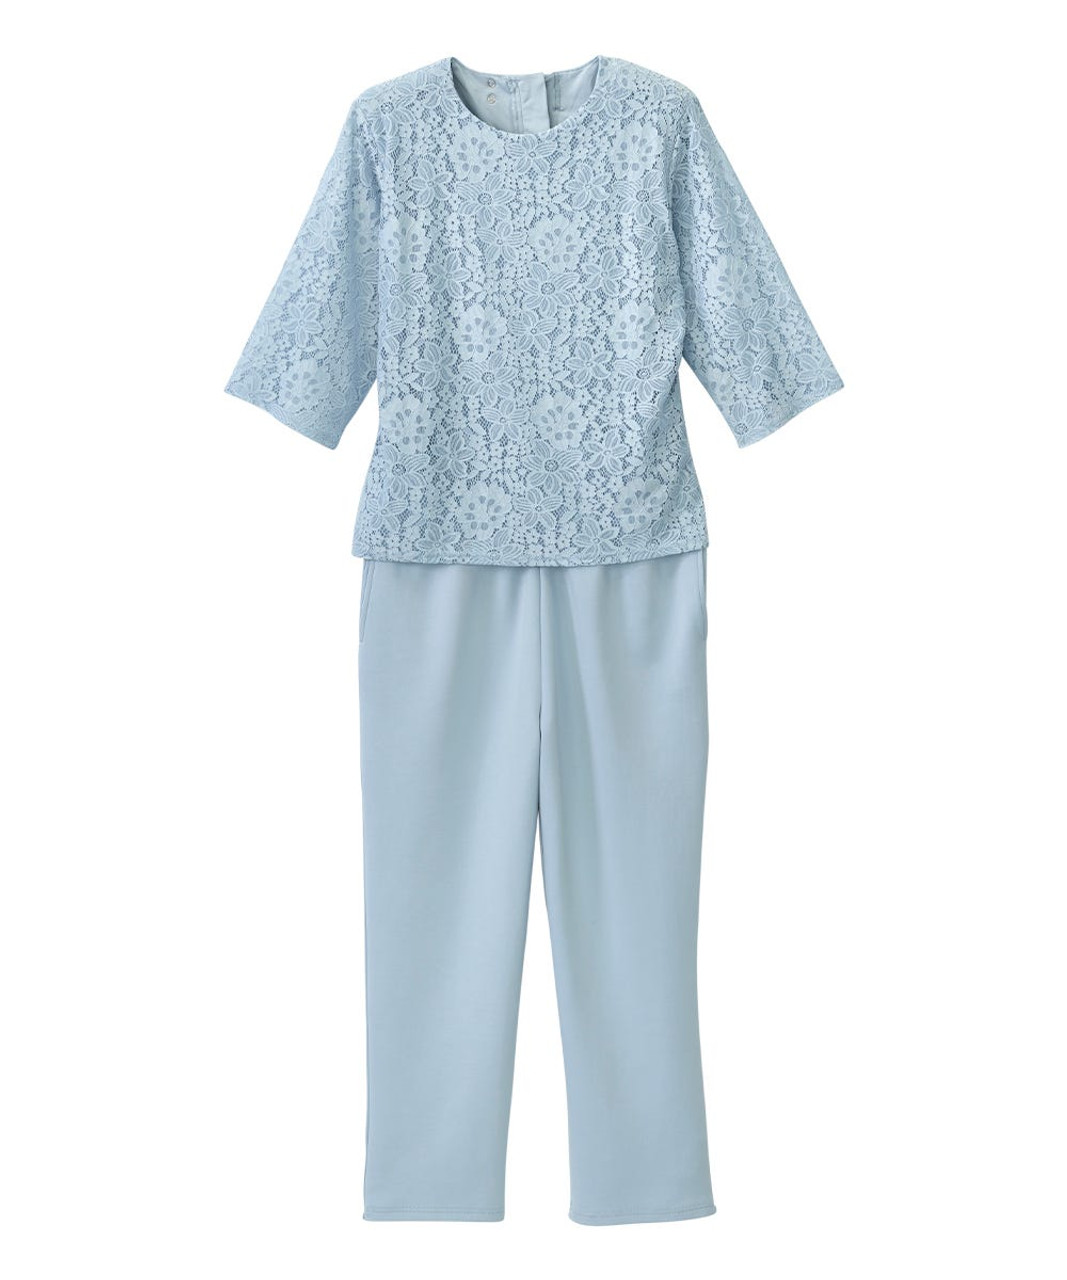 Silverts SV203 Senior Women's Adaptive Lace Anti-Strip Suit Breezy Blue, Size=M, SV203-SV2003-M